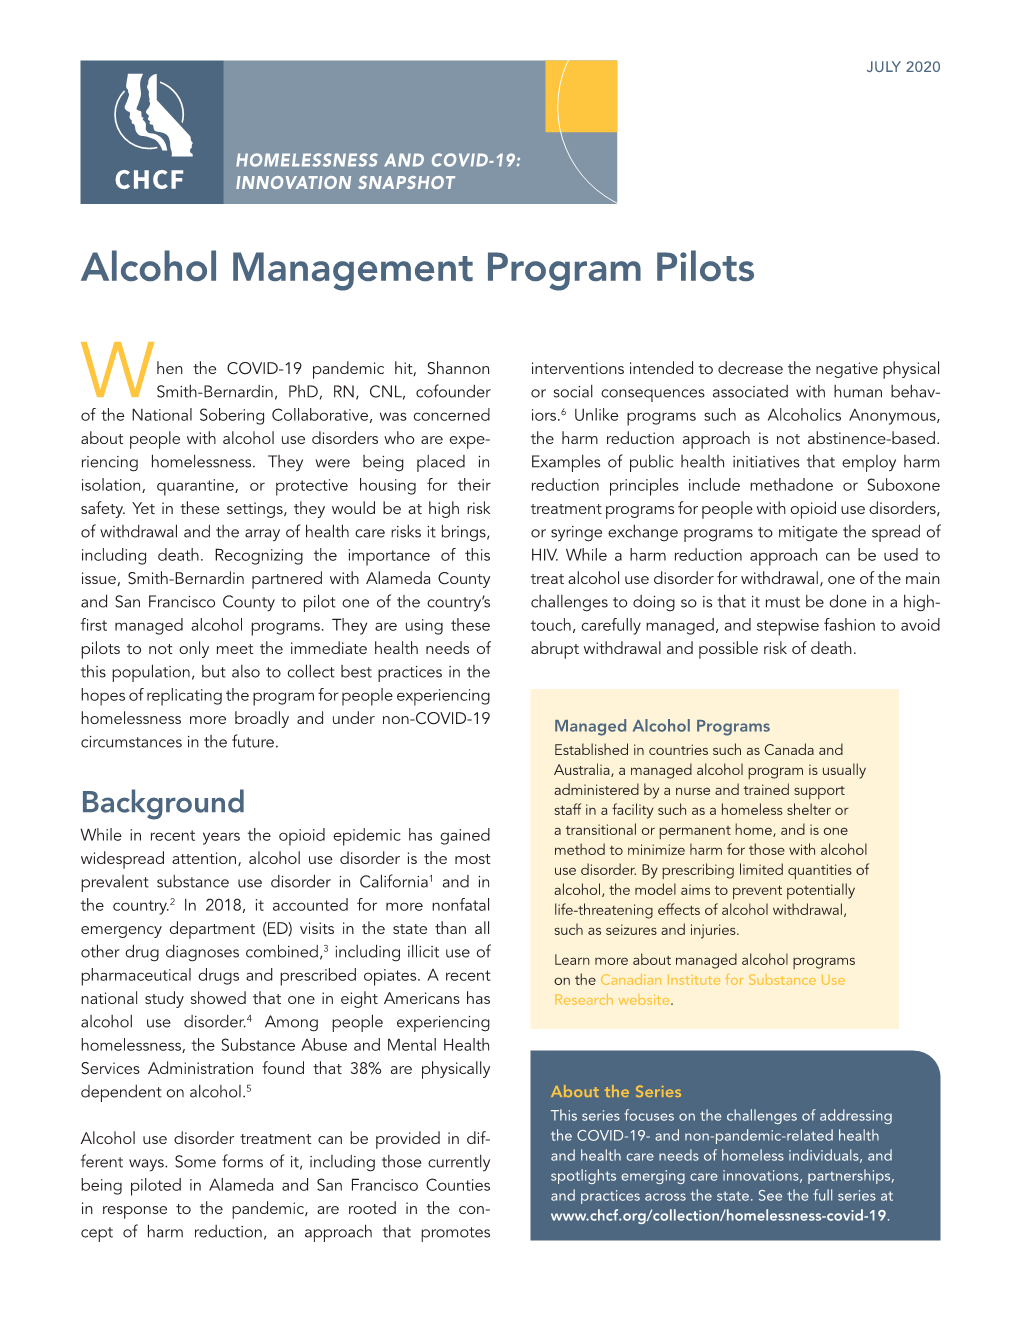 Homelessness and COVID-19: Innovation Snapshot — Alcohol Management Program Pilots